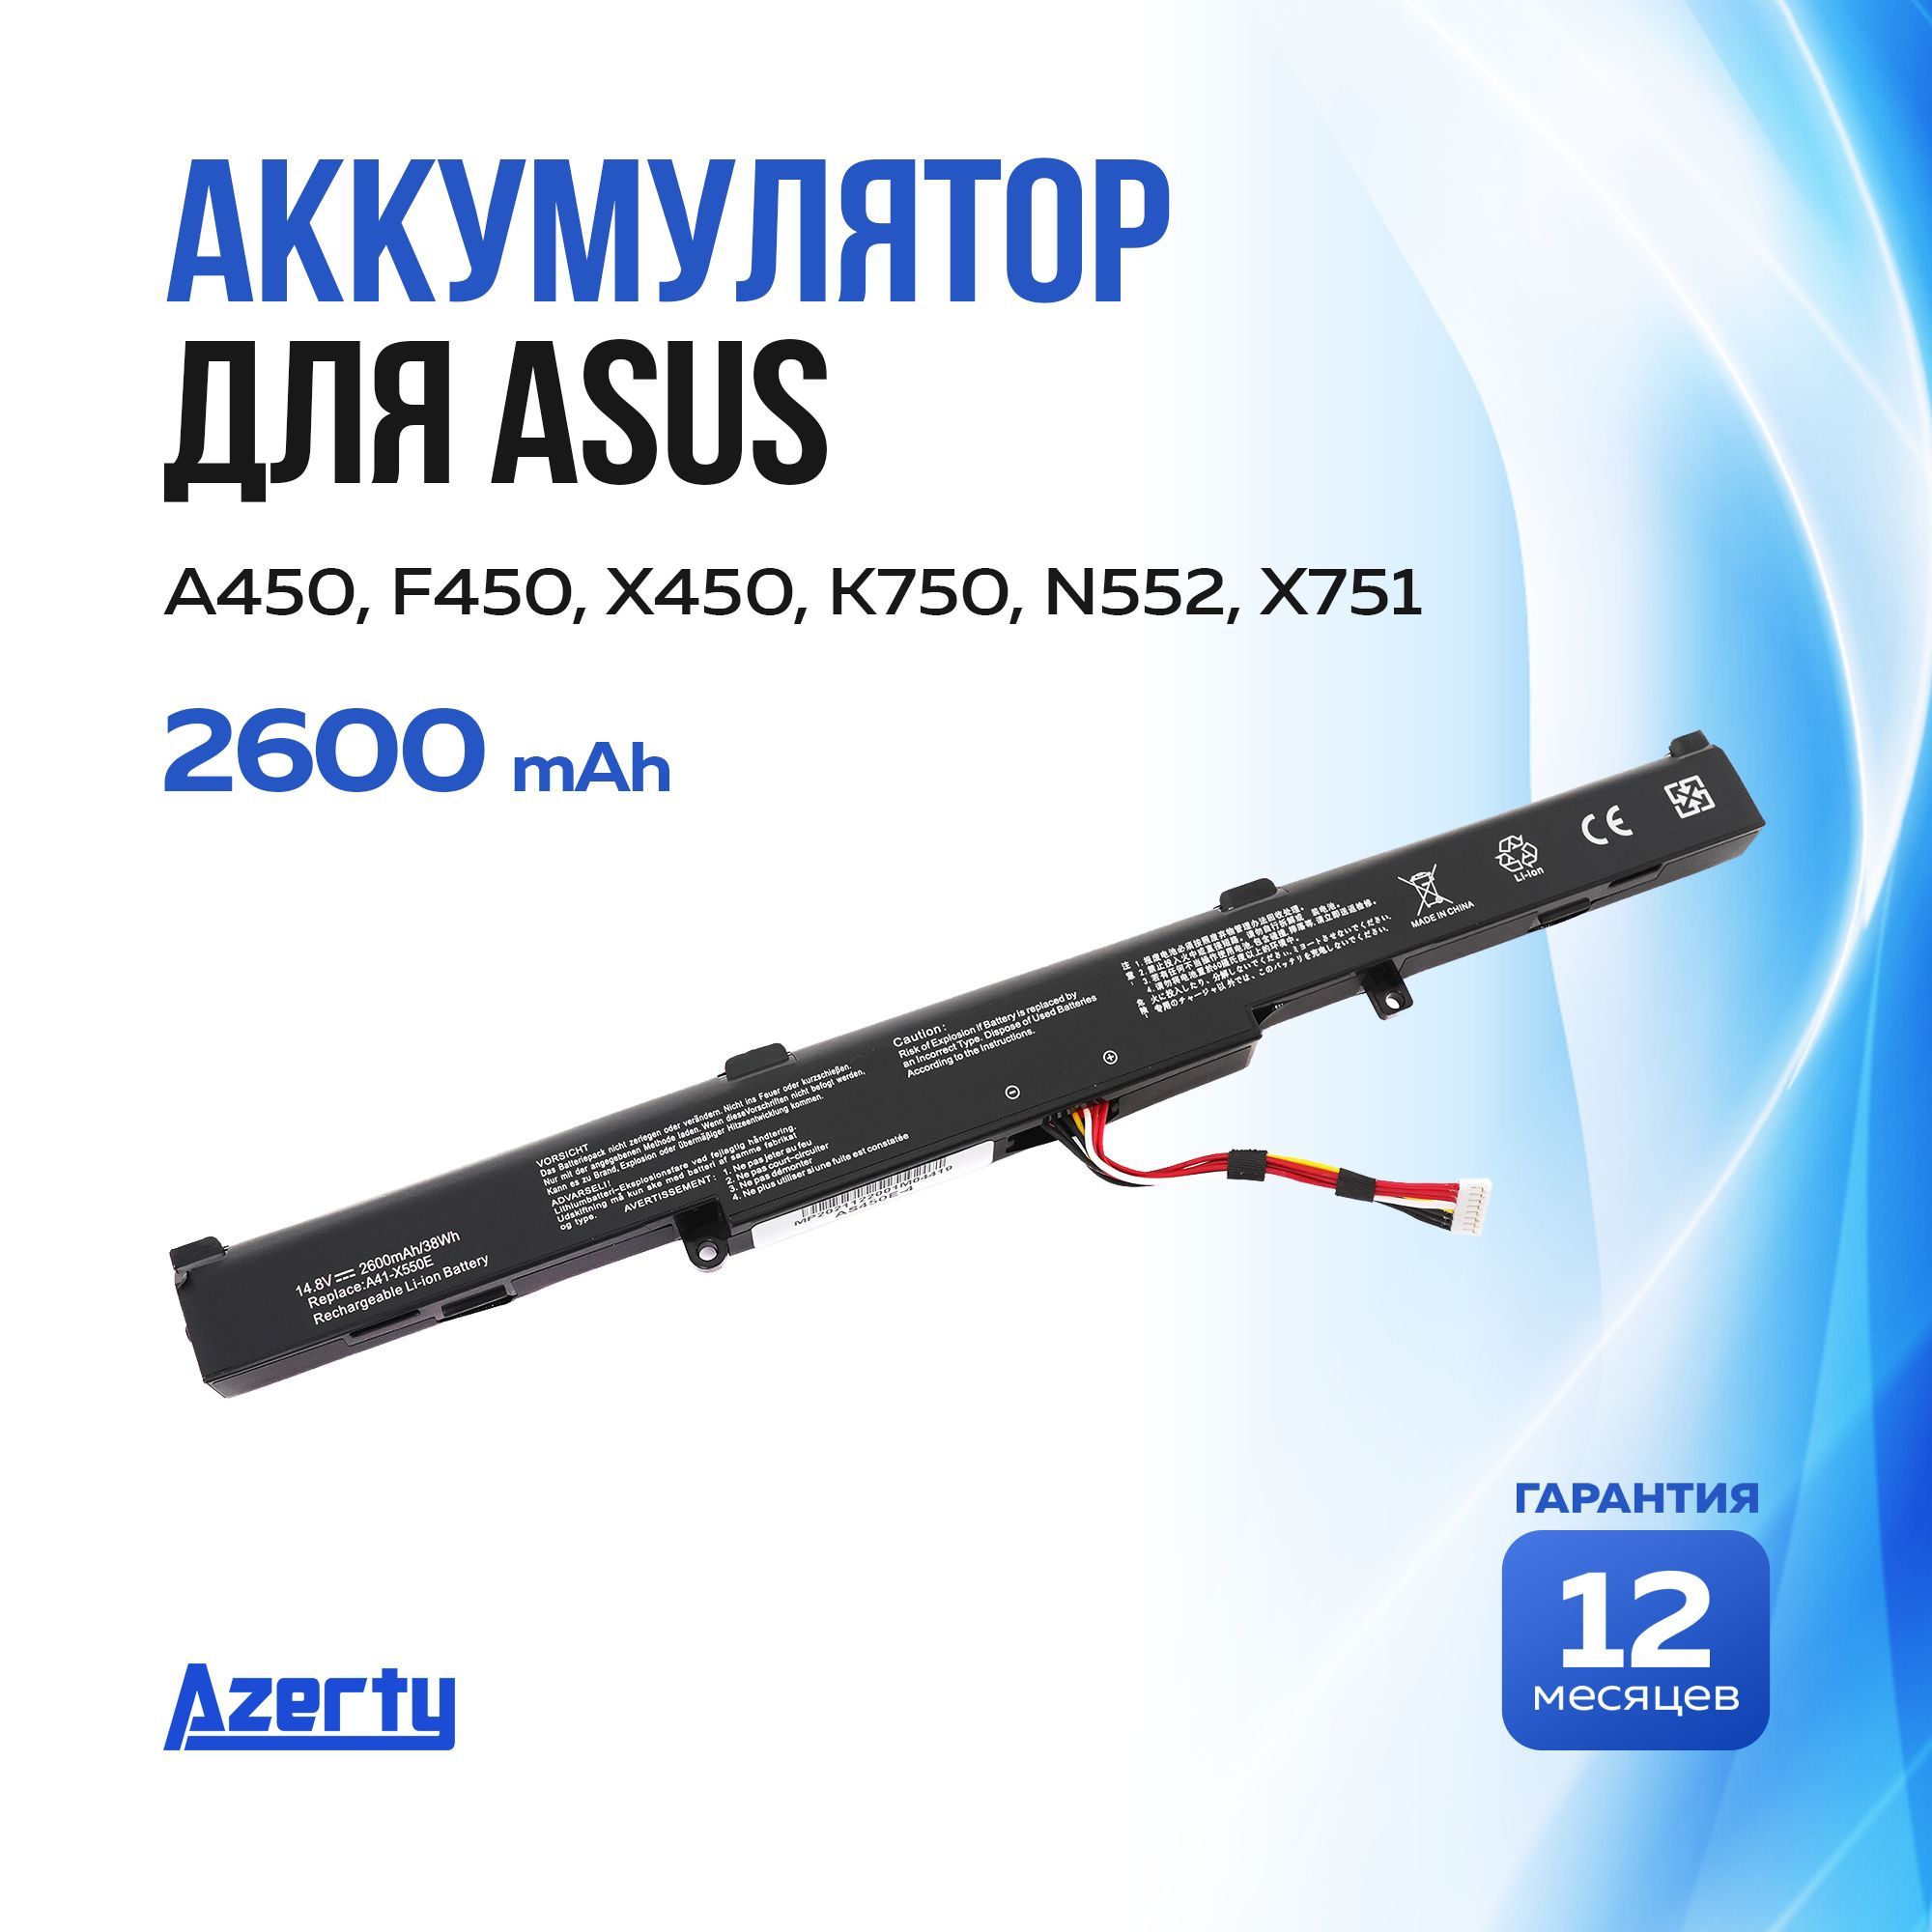 Asus A41 X550e Laptop Battery  X552mj Asus Battery A41 X550a